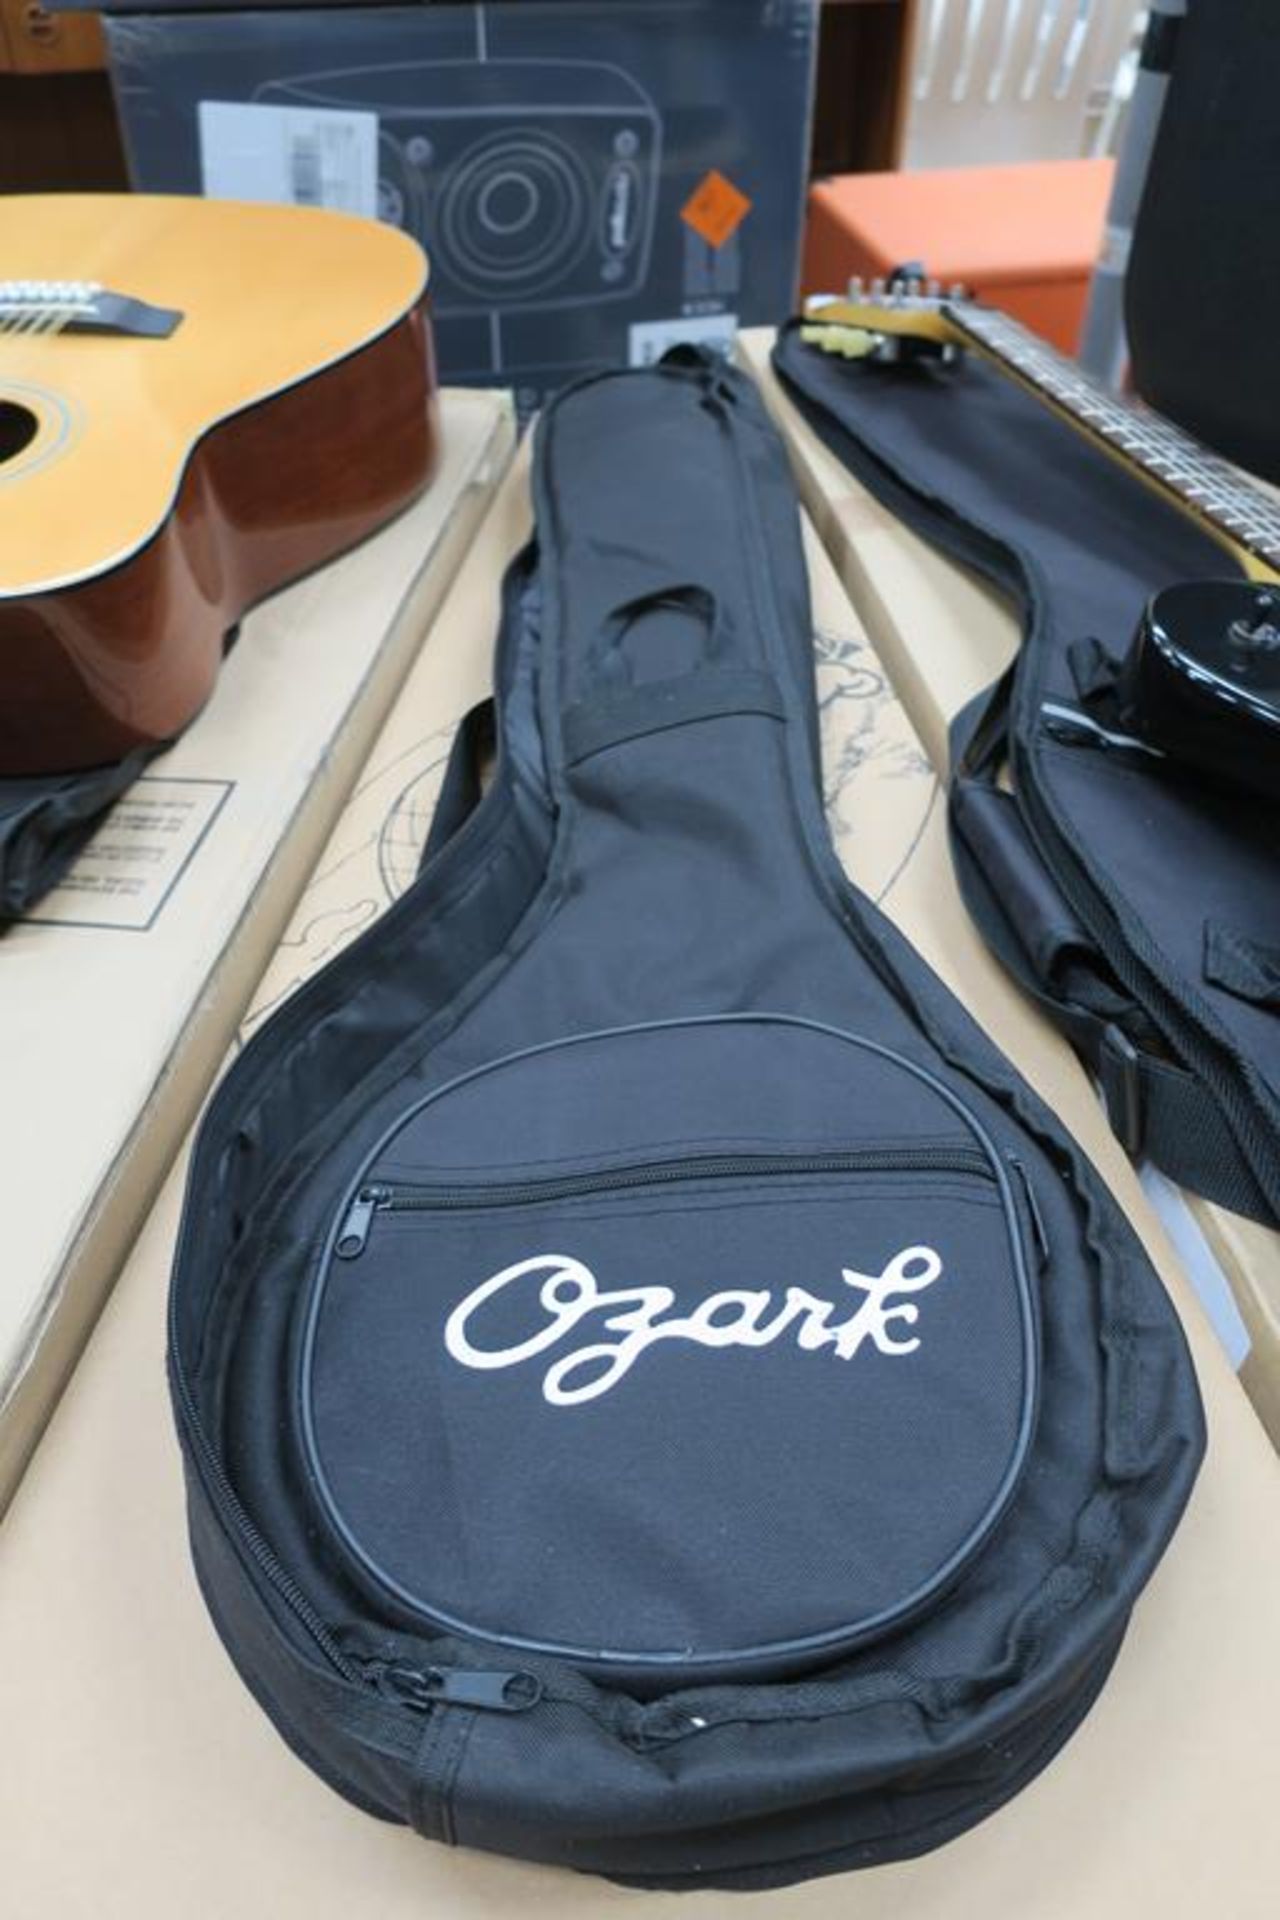 Ozark 5 String Banjo with case - Image 5 of 5